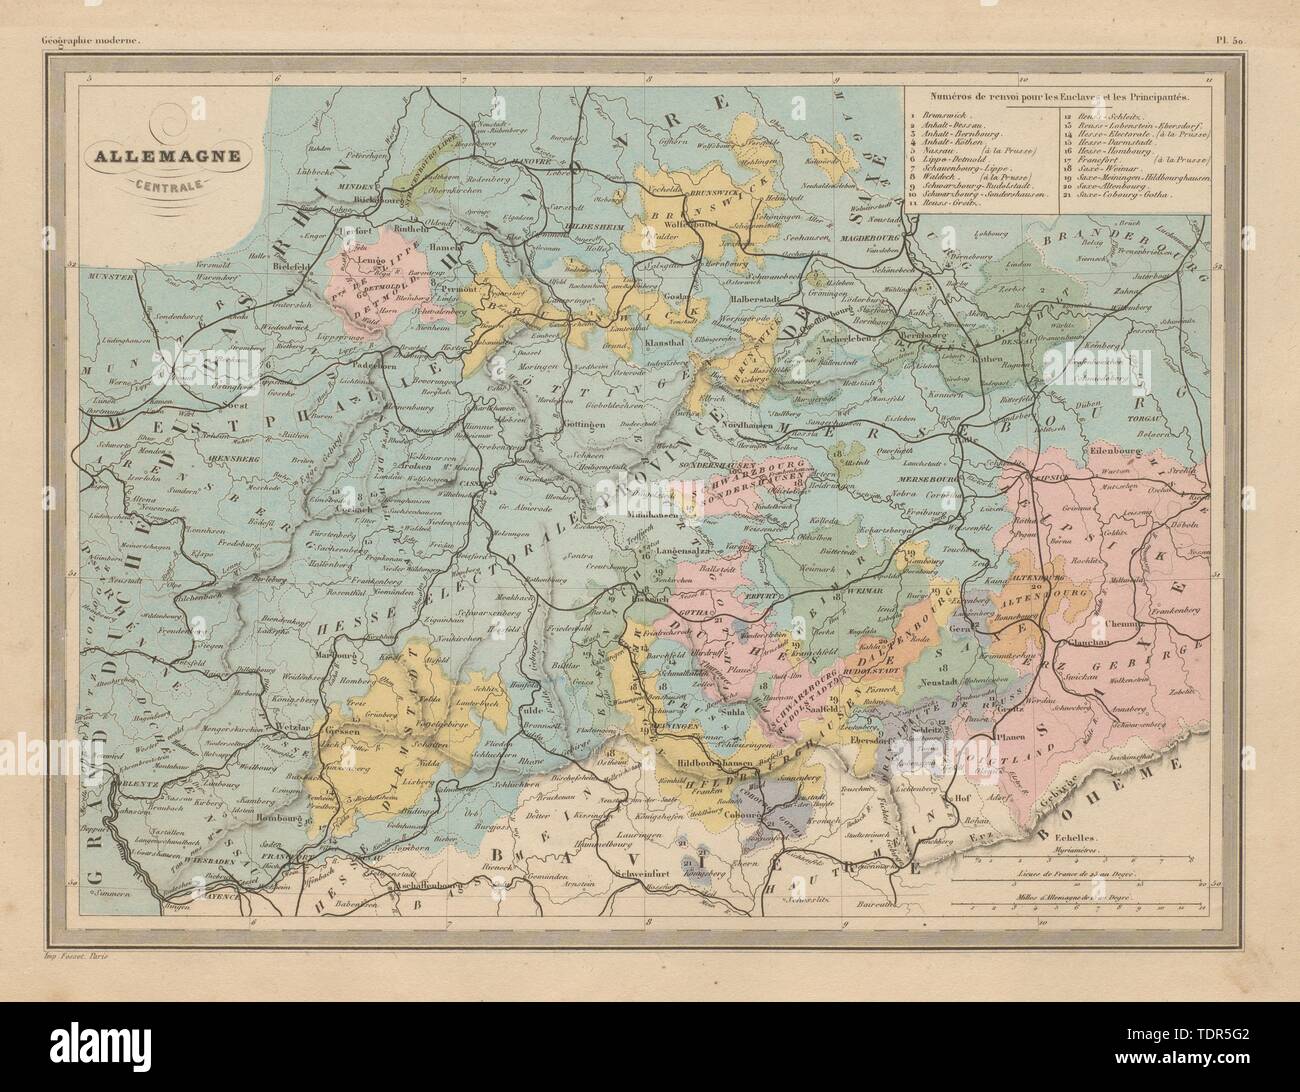 Allemagne Centrale. Alemania Central. De Malte BRUN c1871 antigua gráfico de mapa Foto de stock